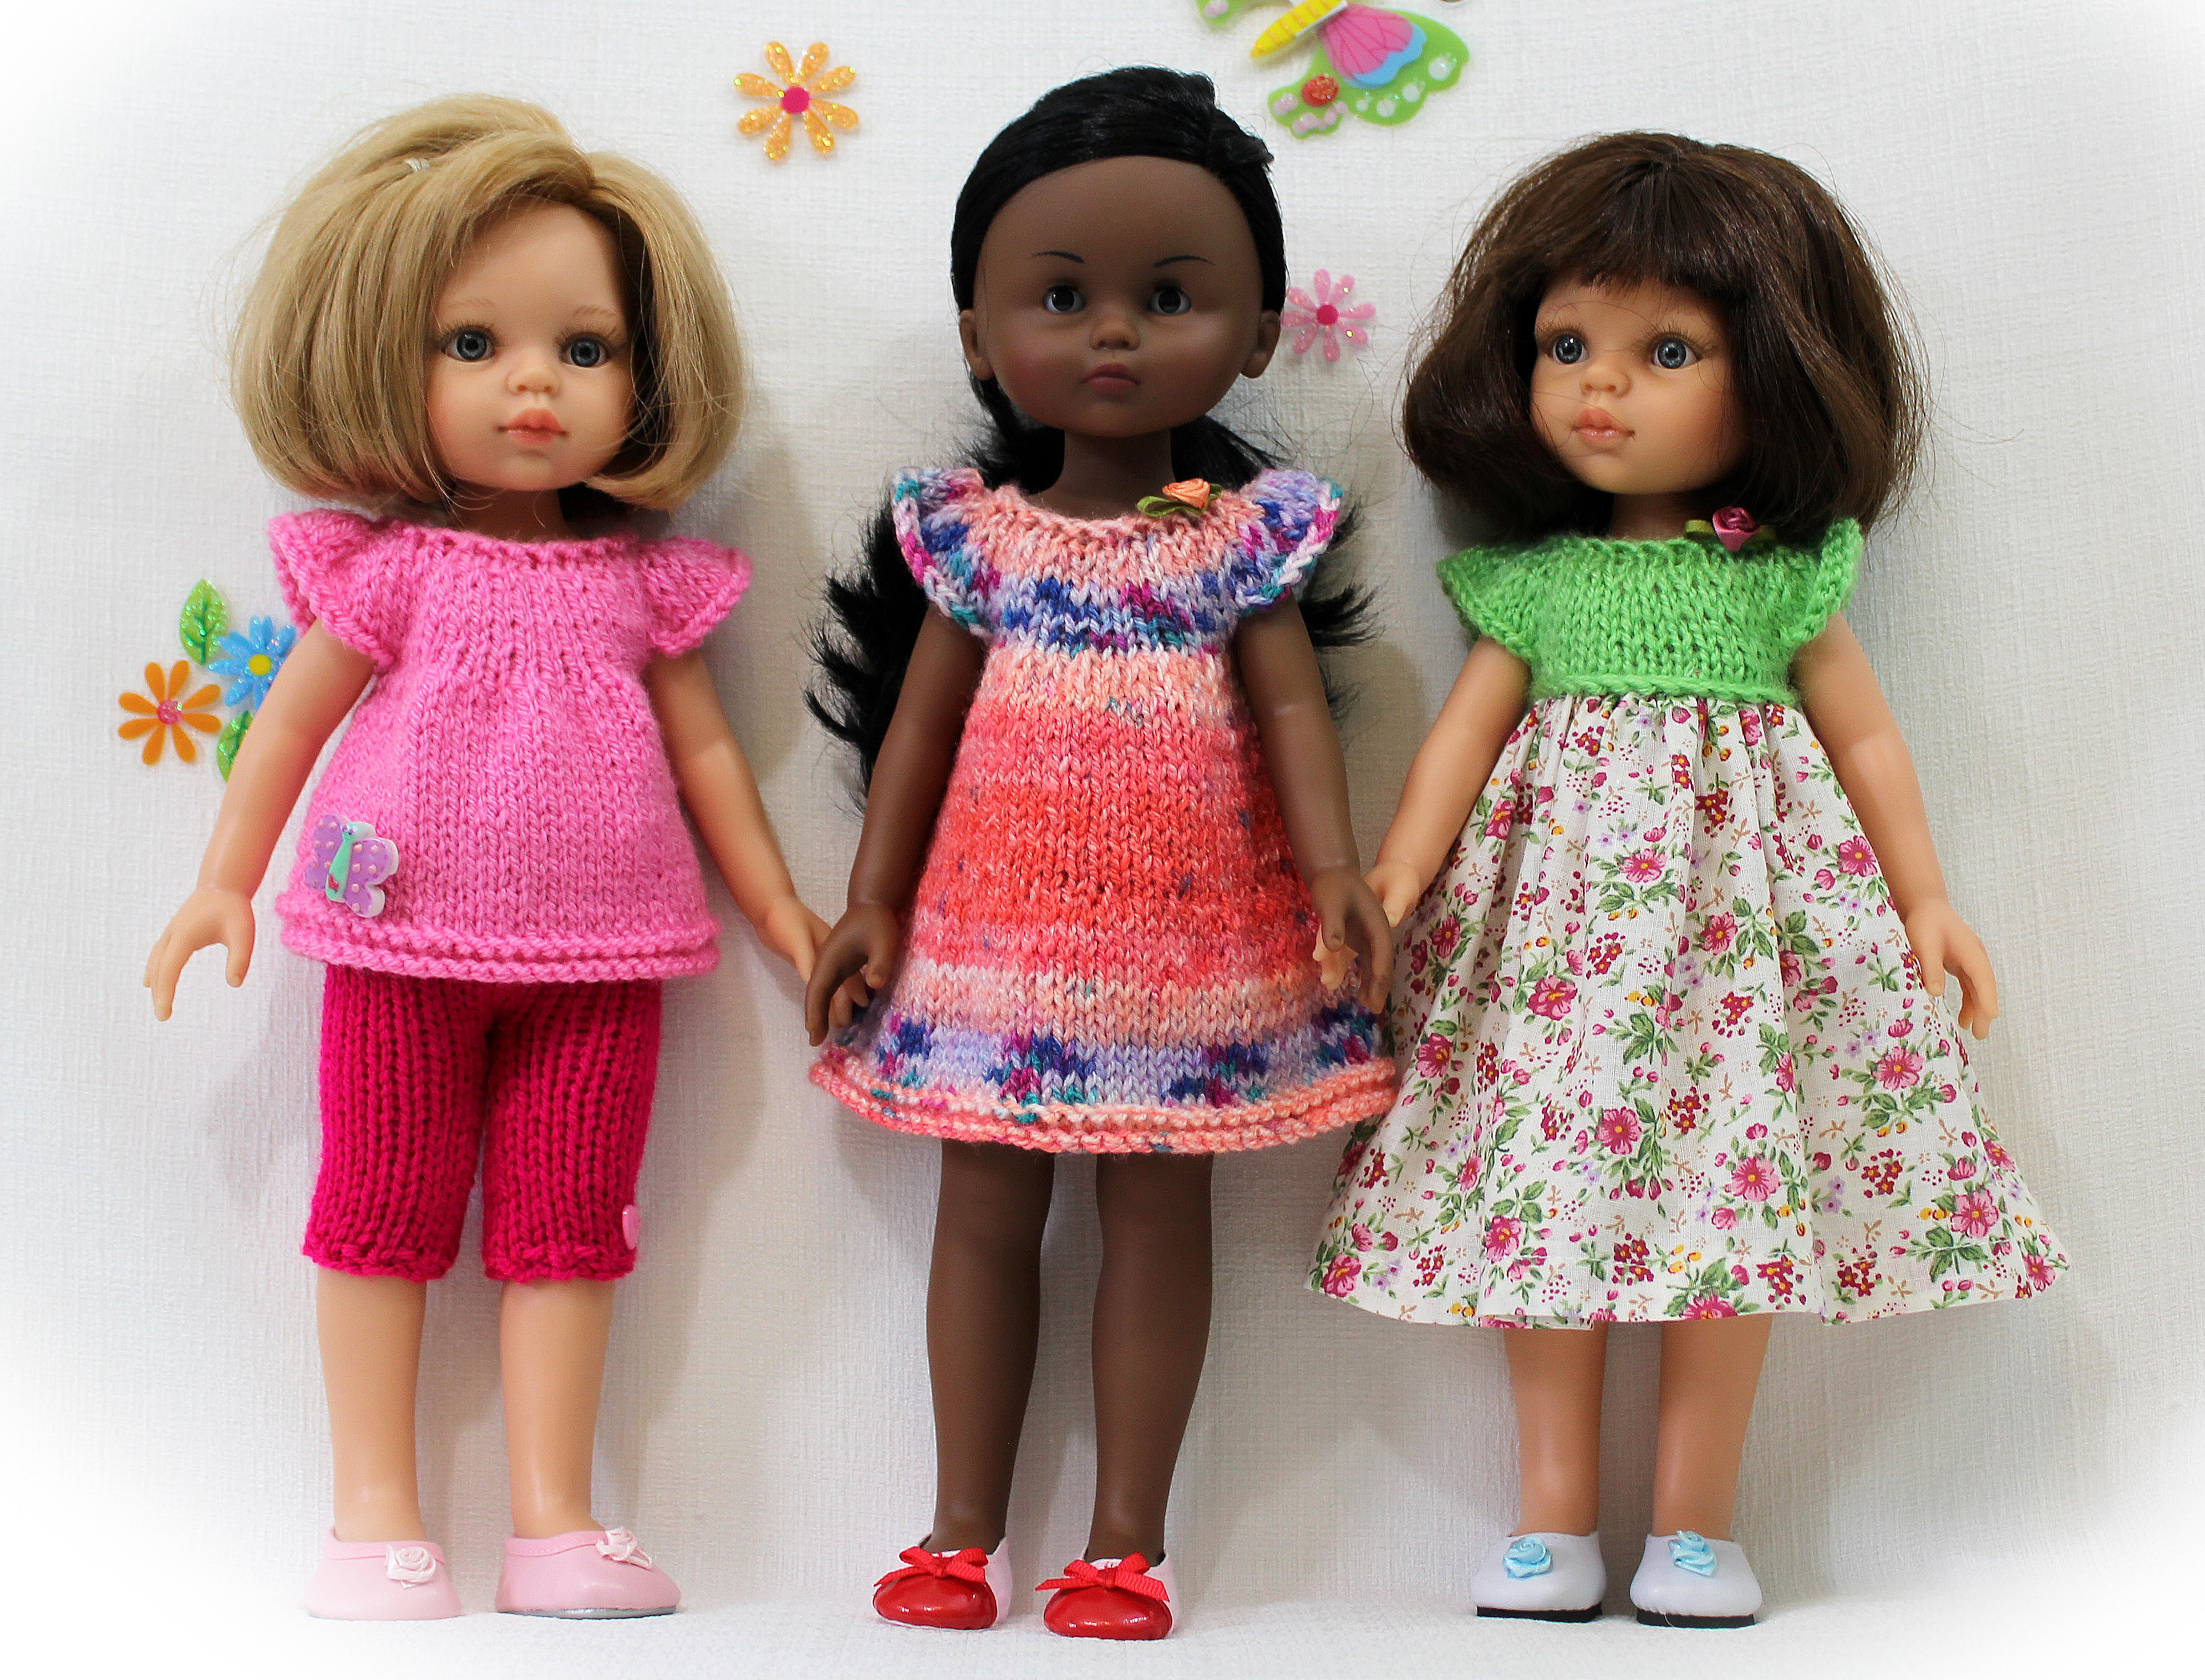 Carole les Cheries doll paola reina Amigas doll Purple black party doll dress doll dress fo 13-14 dolls outfit dress